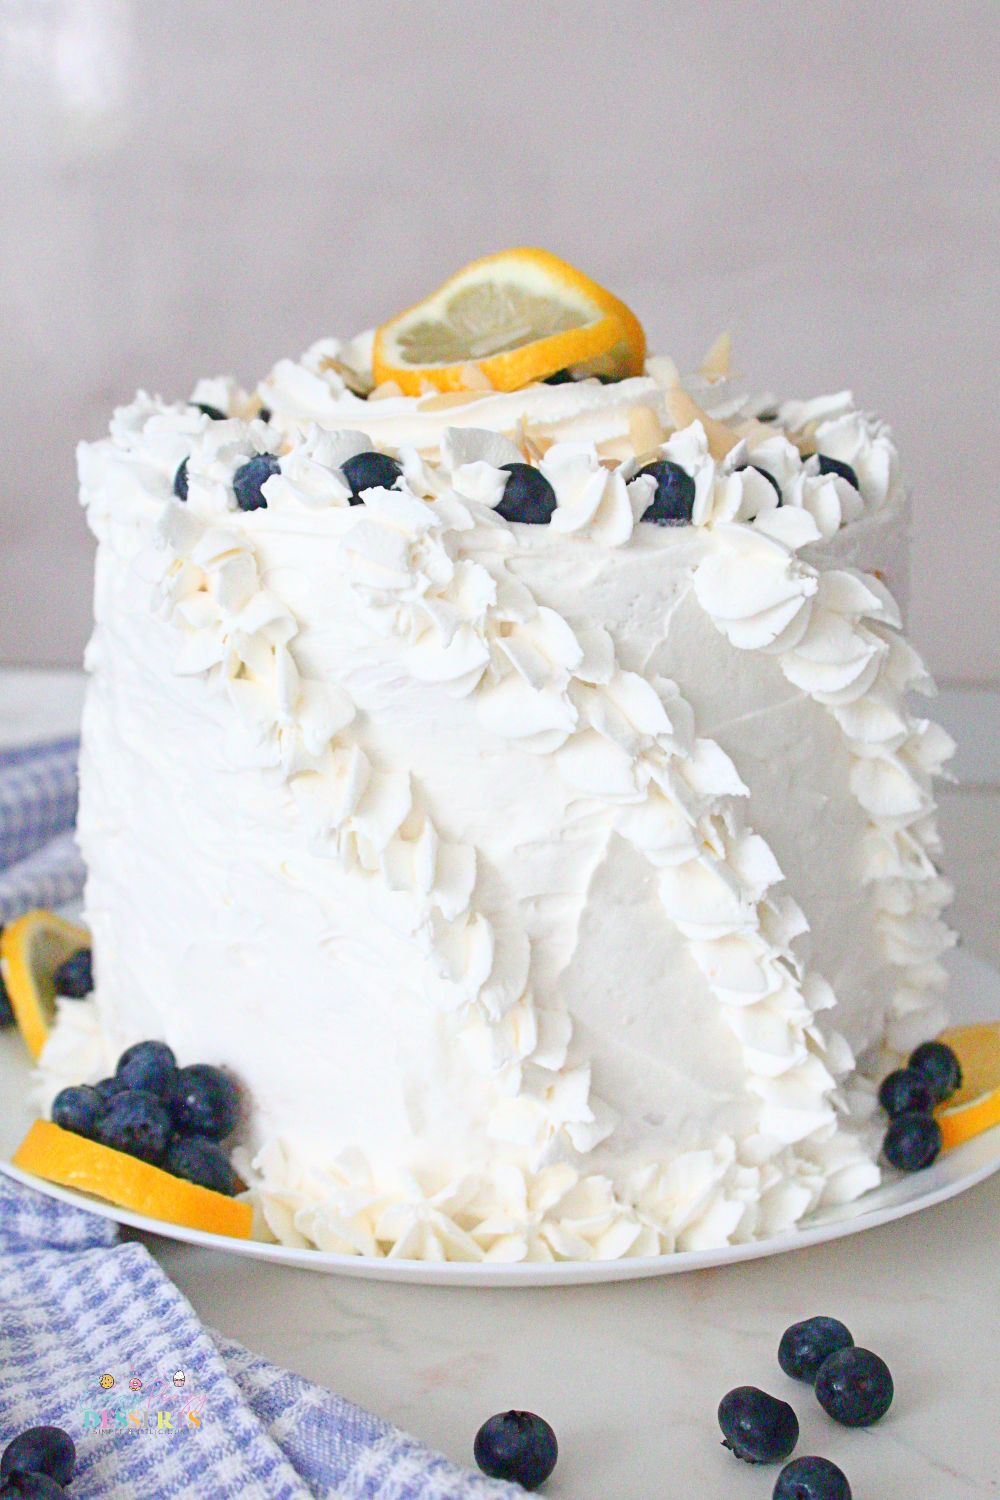 Lemon blueberry cake on a cake plate